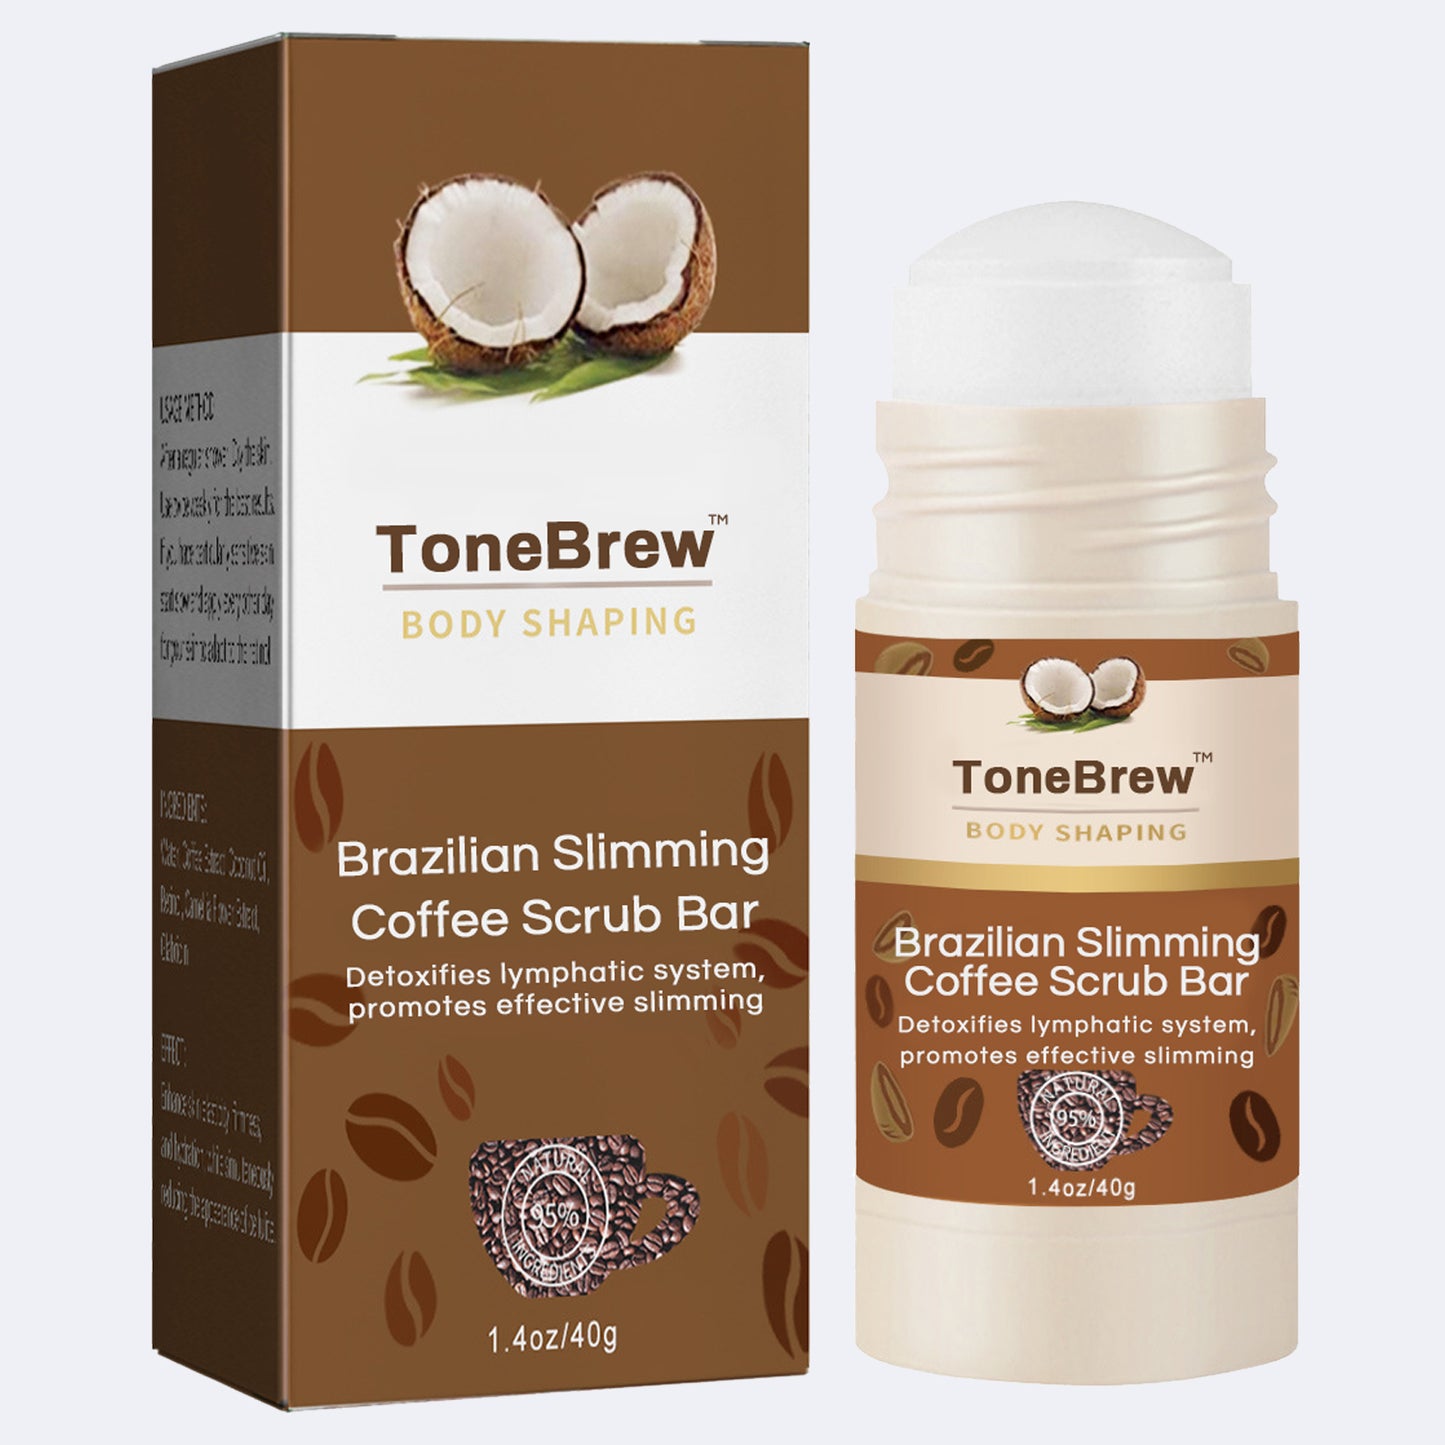 ToneBrew™ brasilianischer Kaffee-Peeling zum Abnehmen